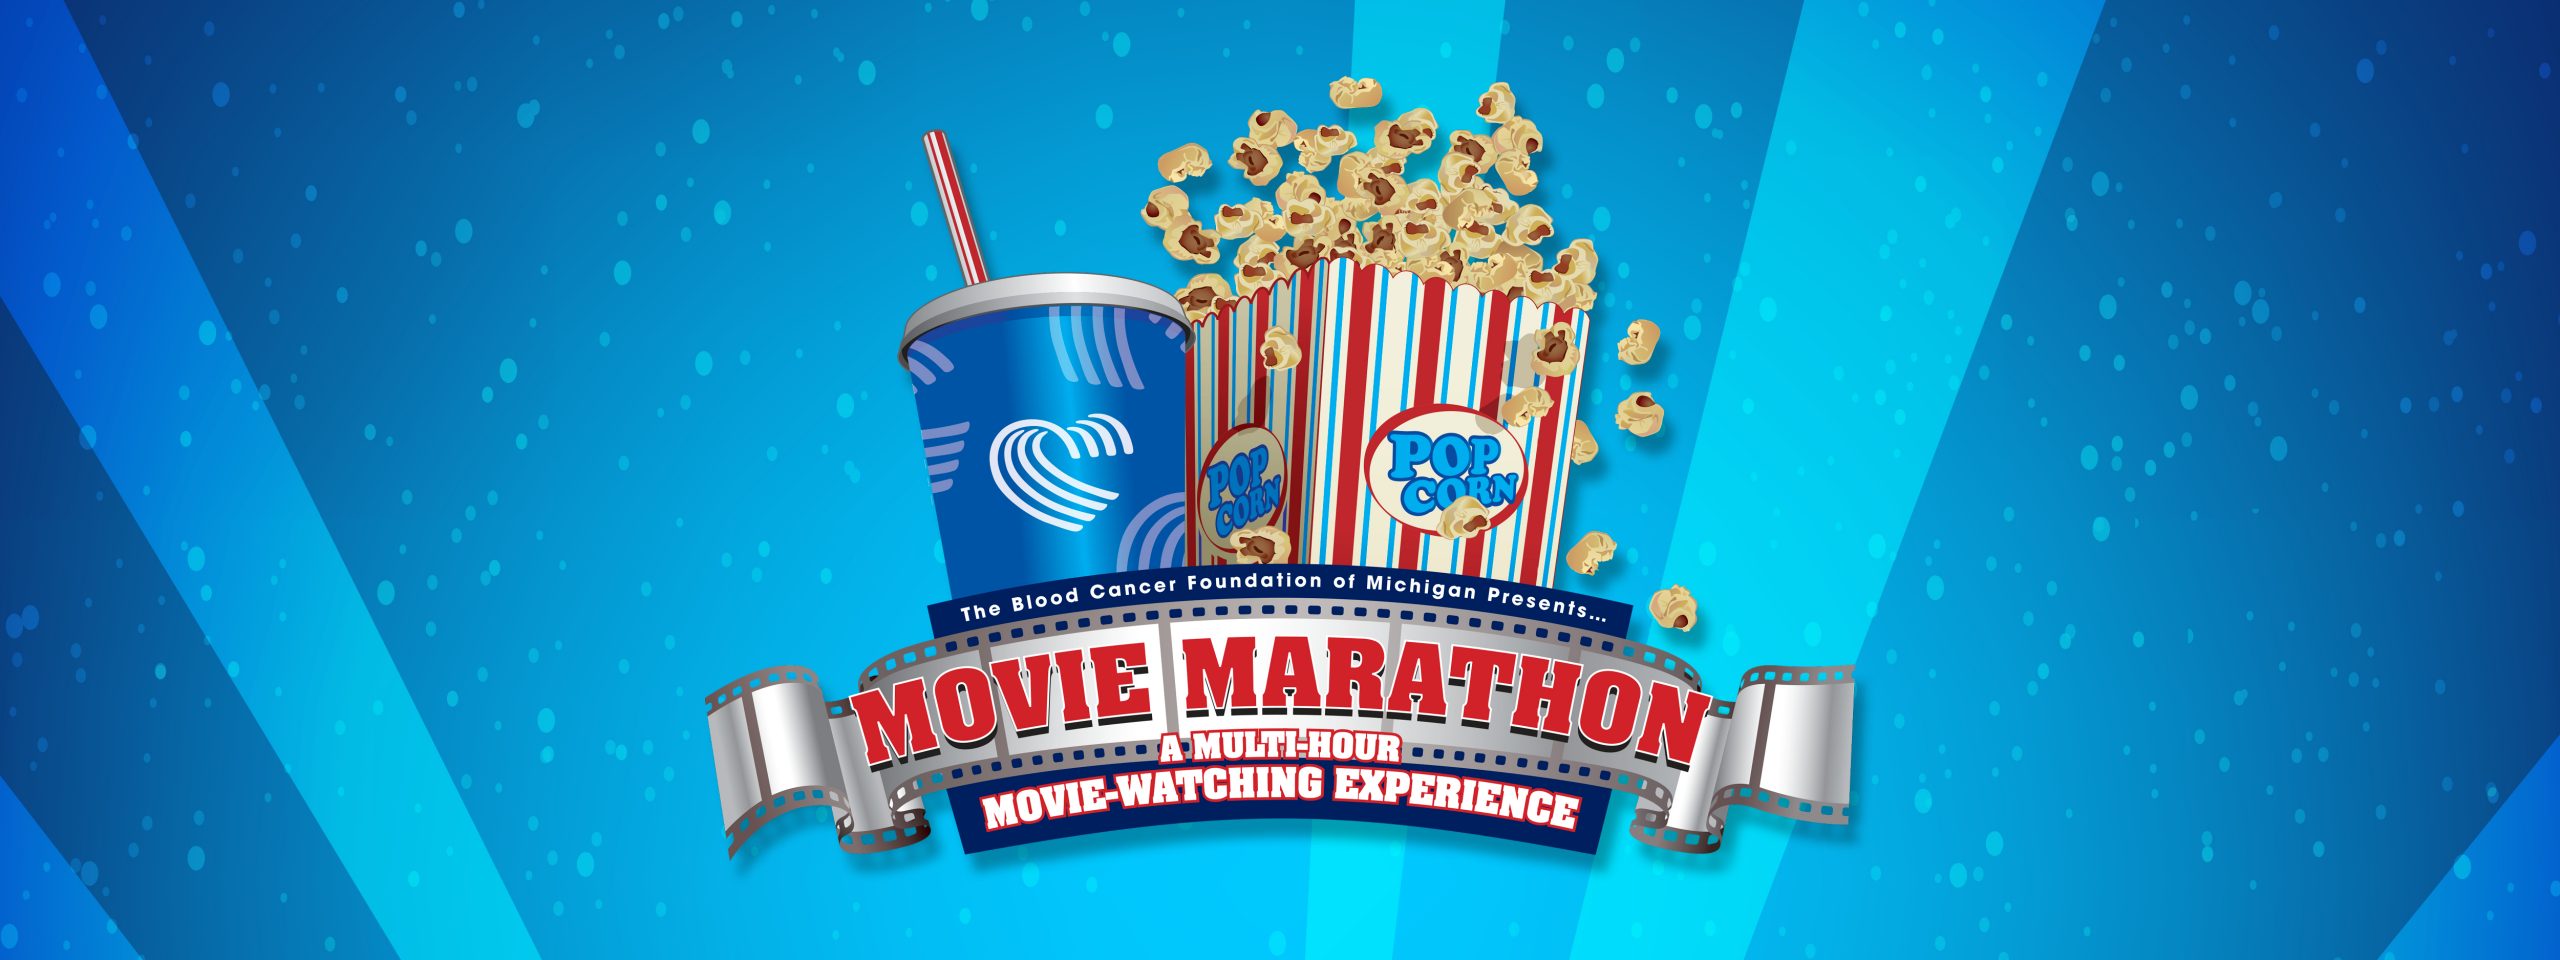 Movie Marathon, A Multi-Hour Movie-Watching Experience